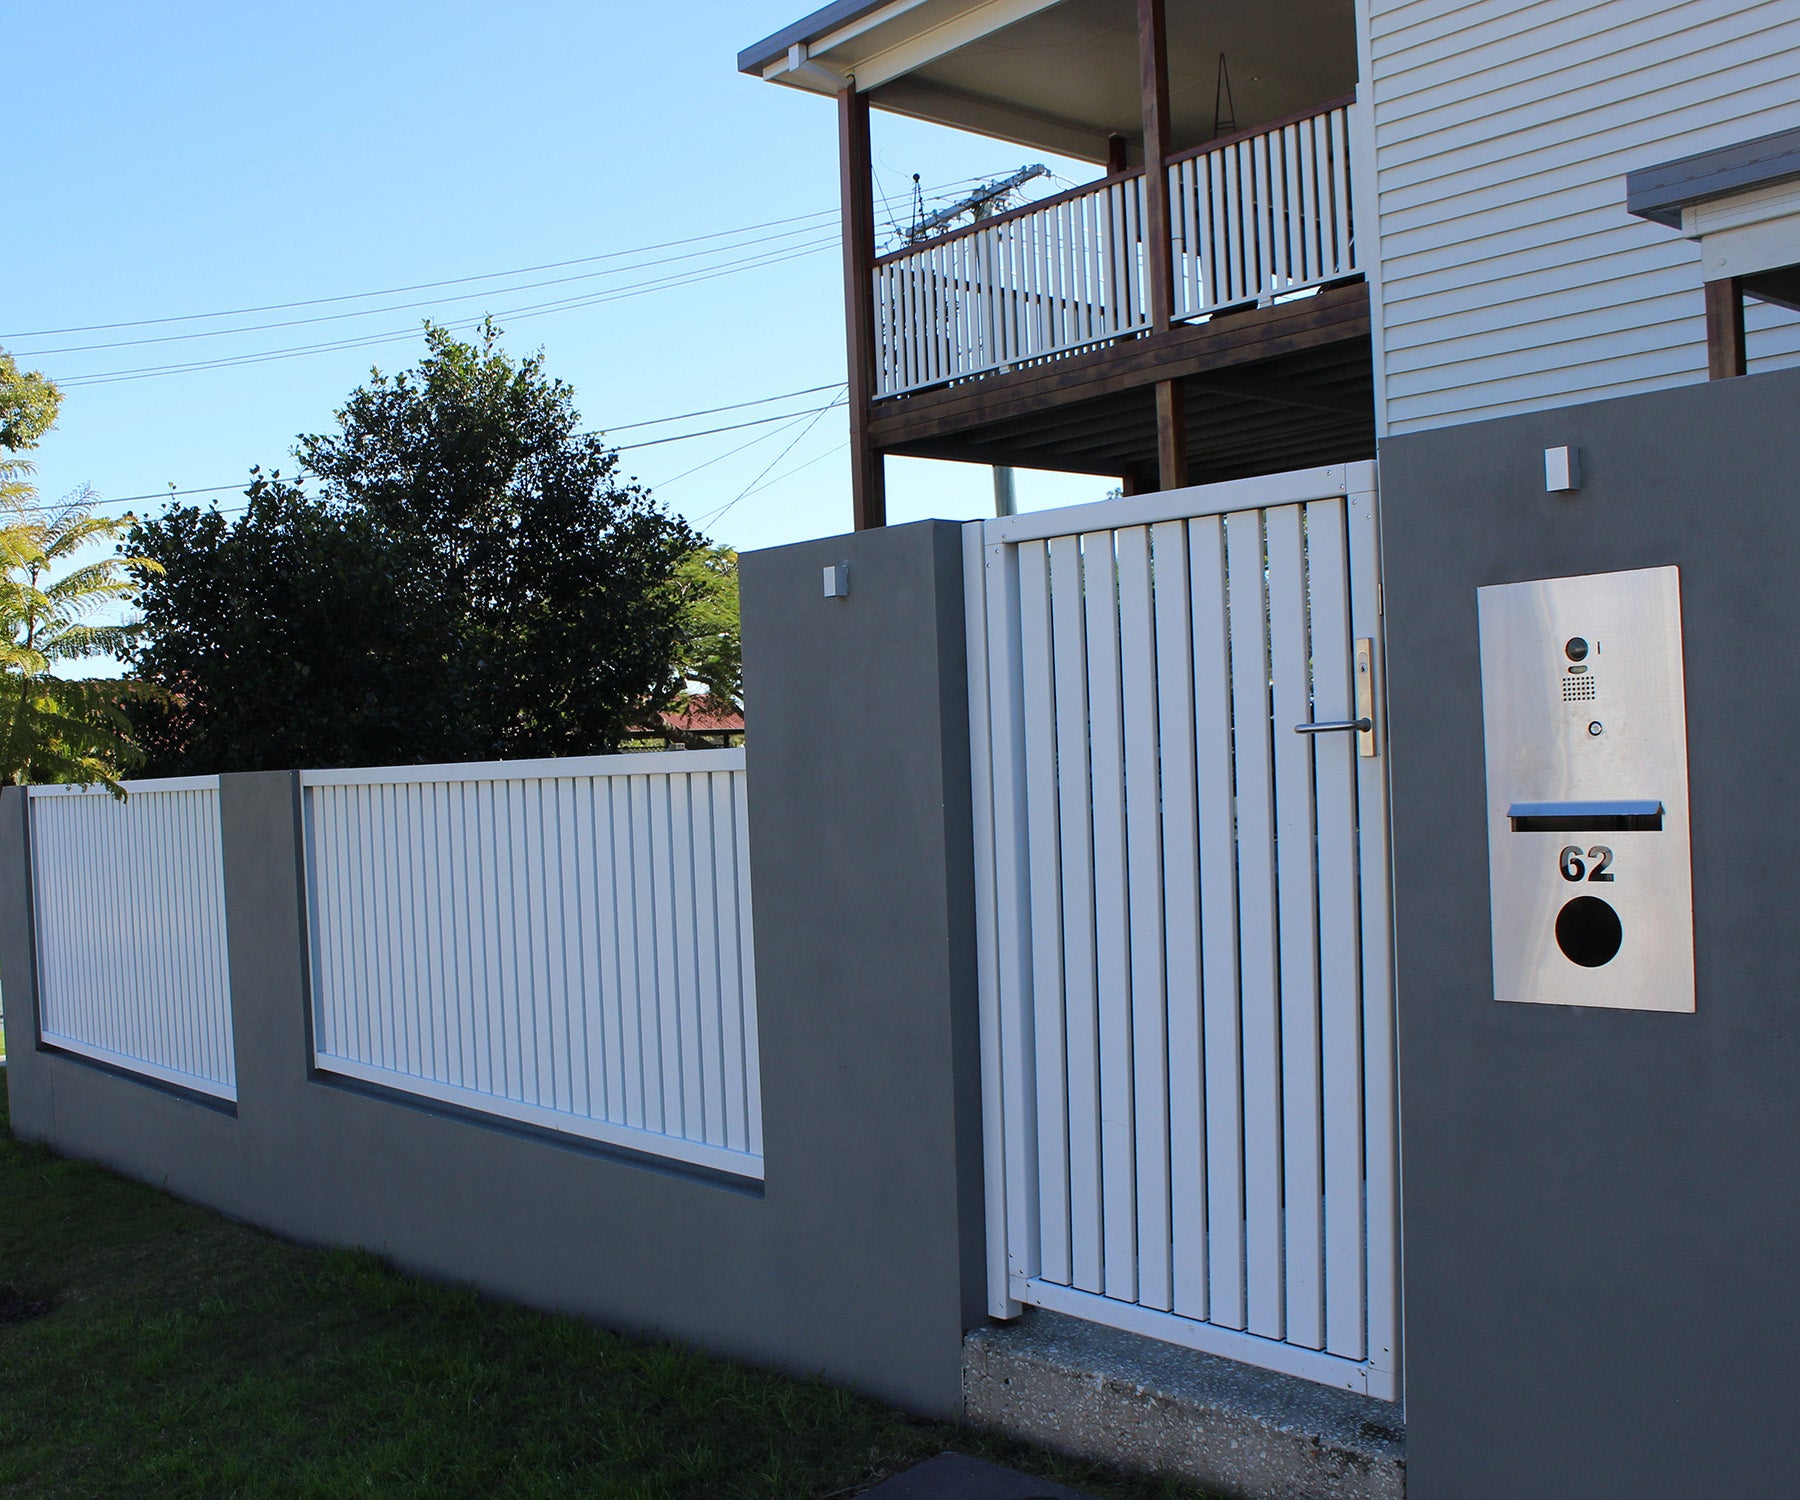 Clik'n'Fit Aluminium Vertical Slat Pearl White Gate Fence